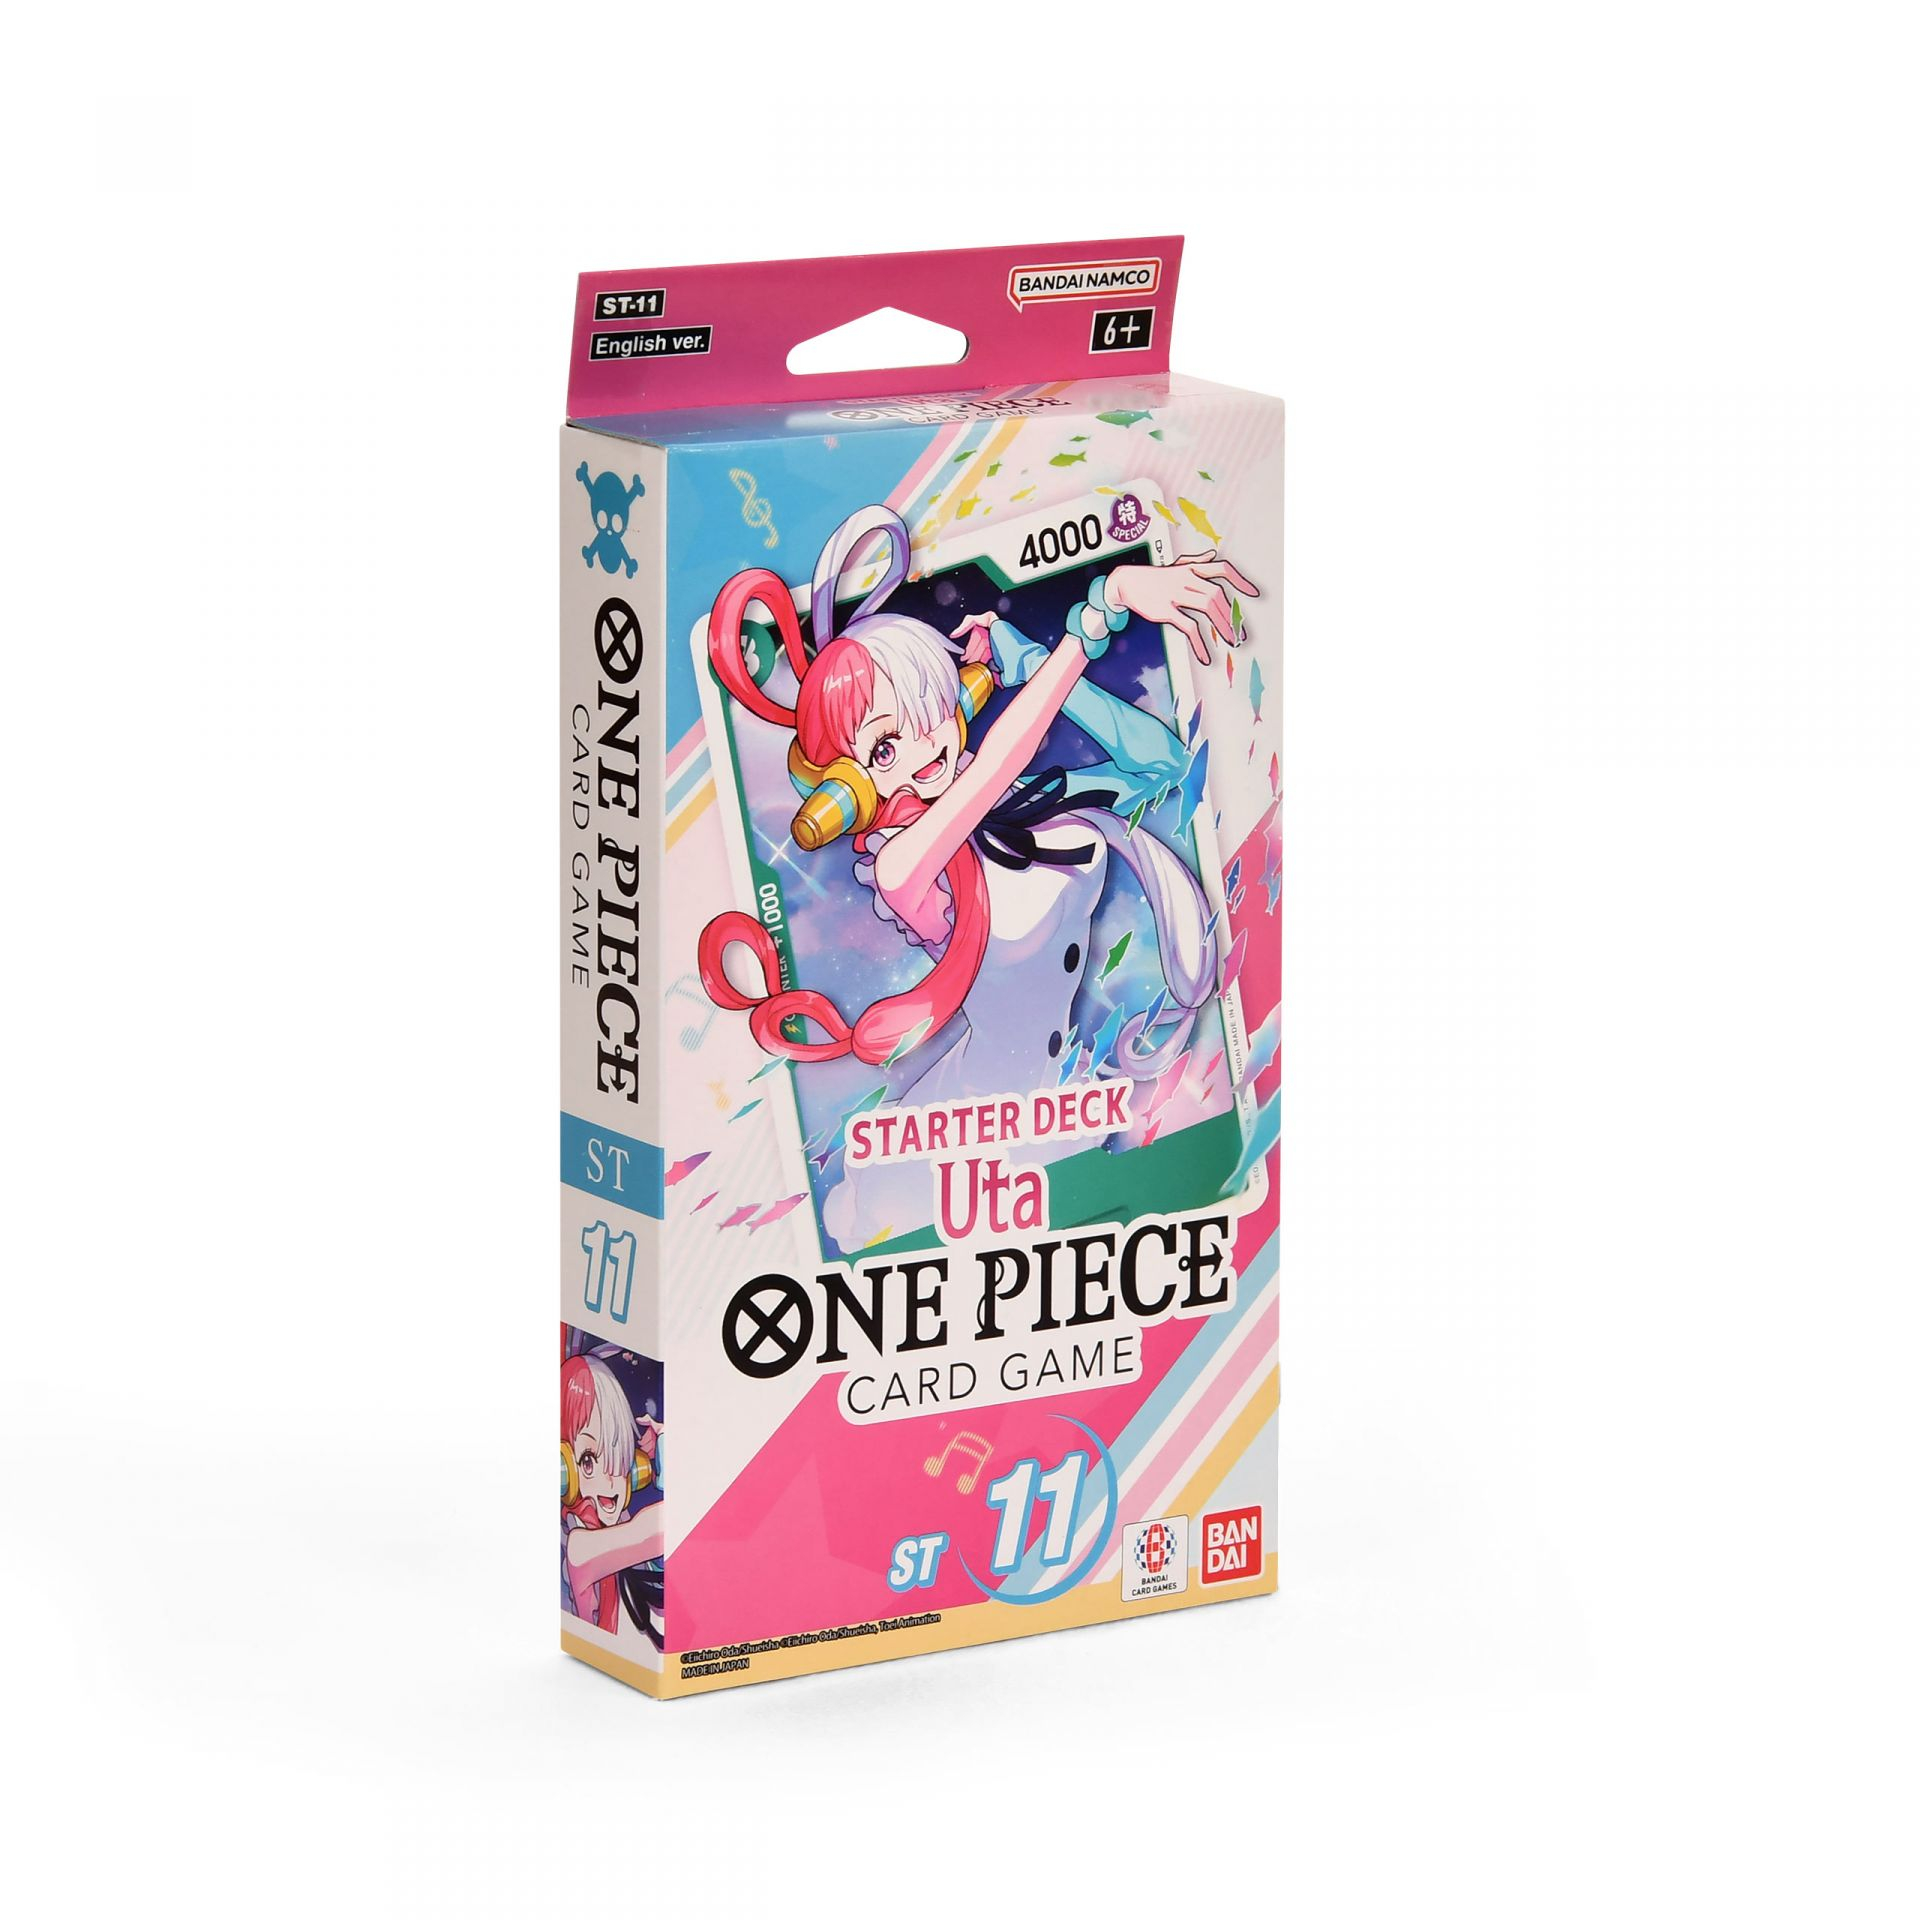 One Piece - Card Game - Uta - Starter Deck ST11 - englisch - TCG